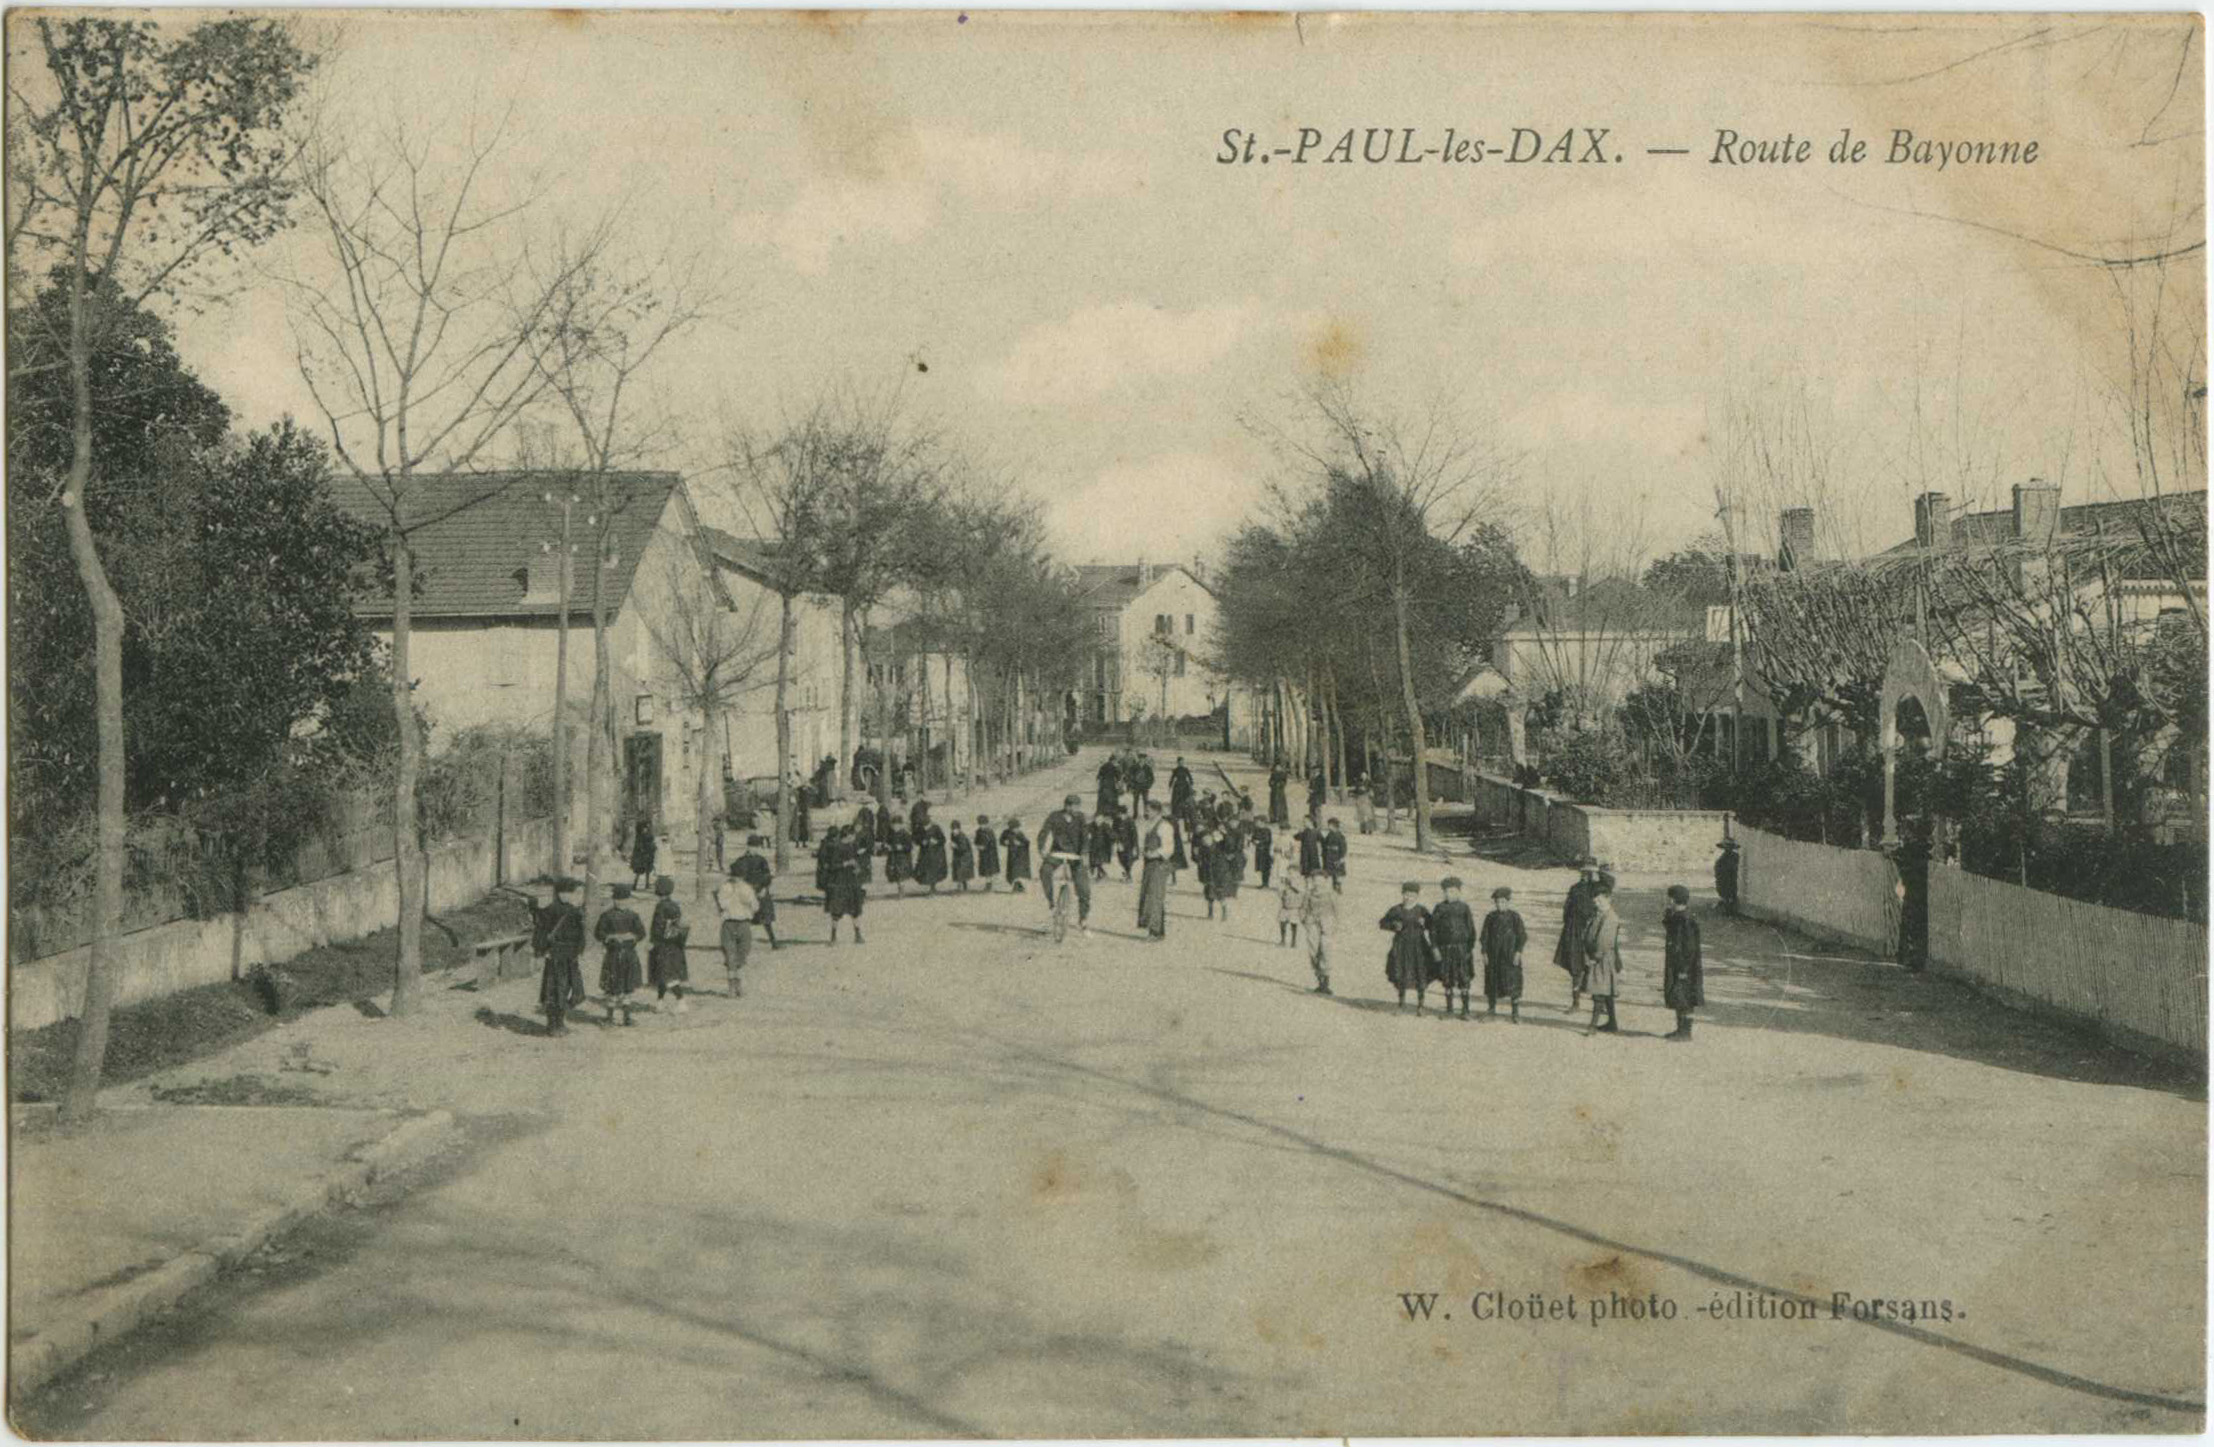 Saint-Paul-lès-Dax - Route de Bayonne